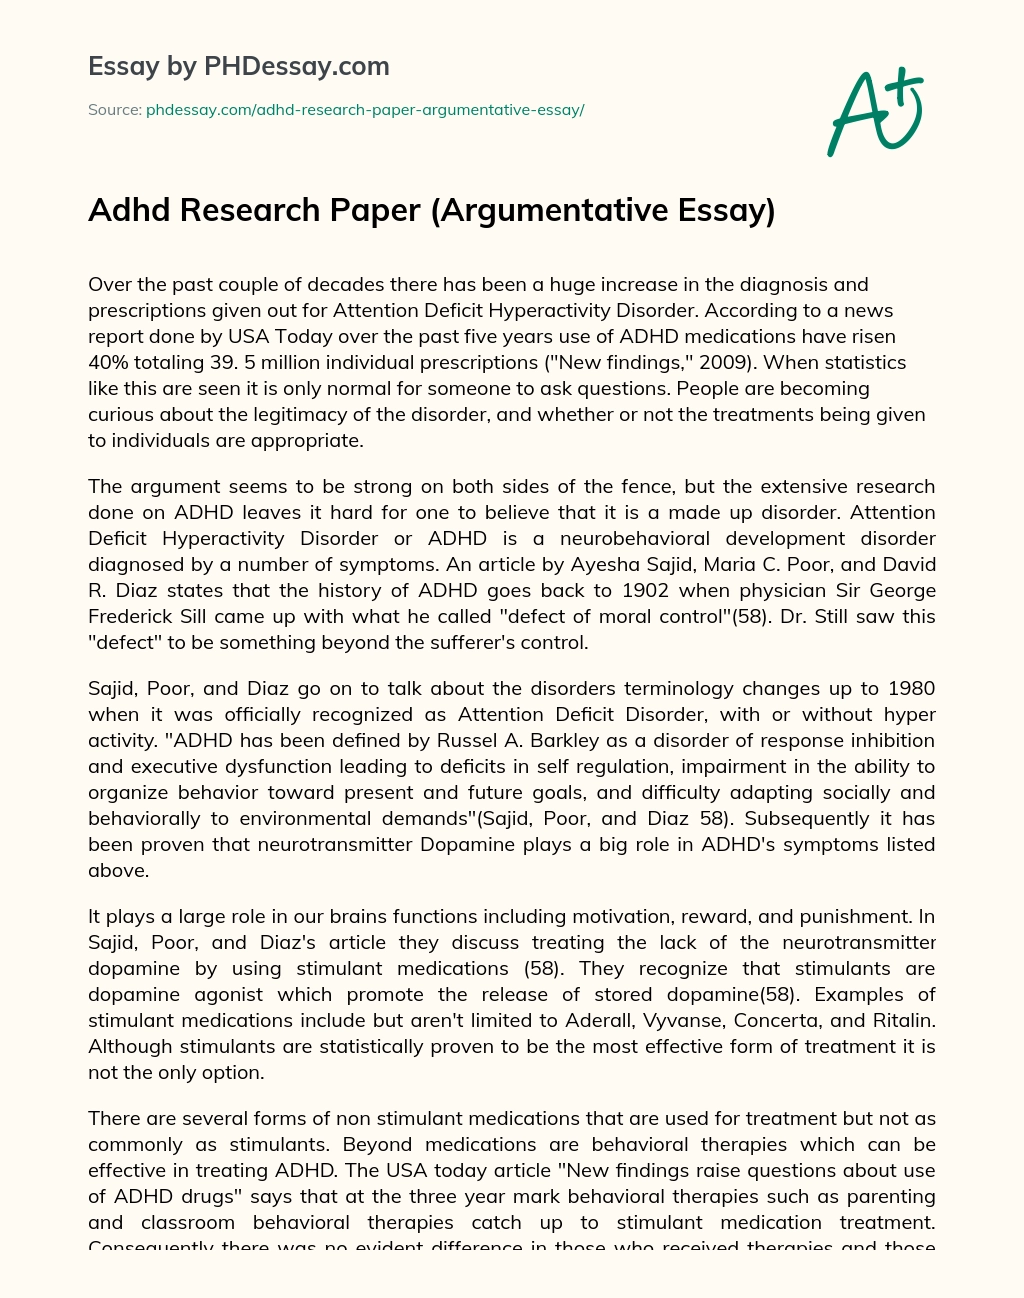 Adhd Research Paper (Argumentative Essay) essay